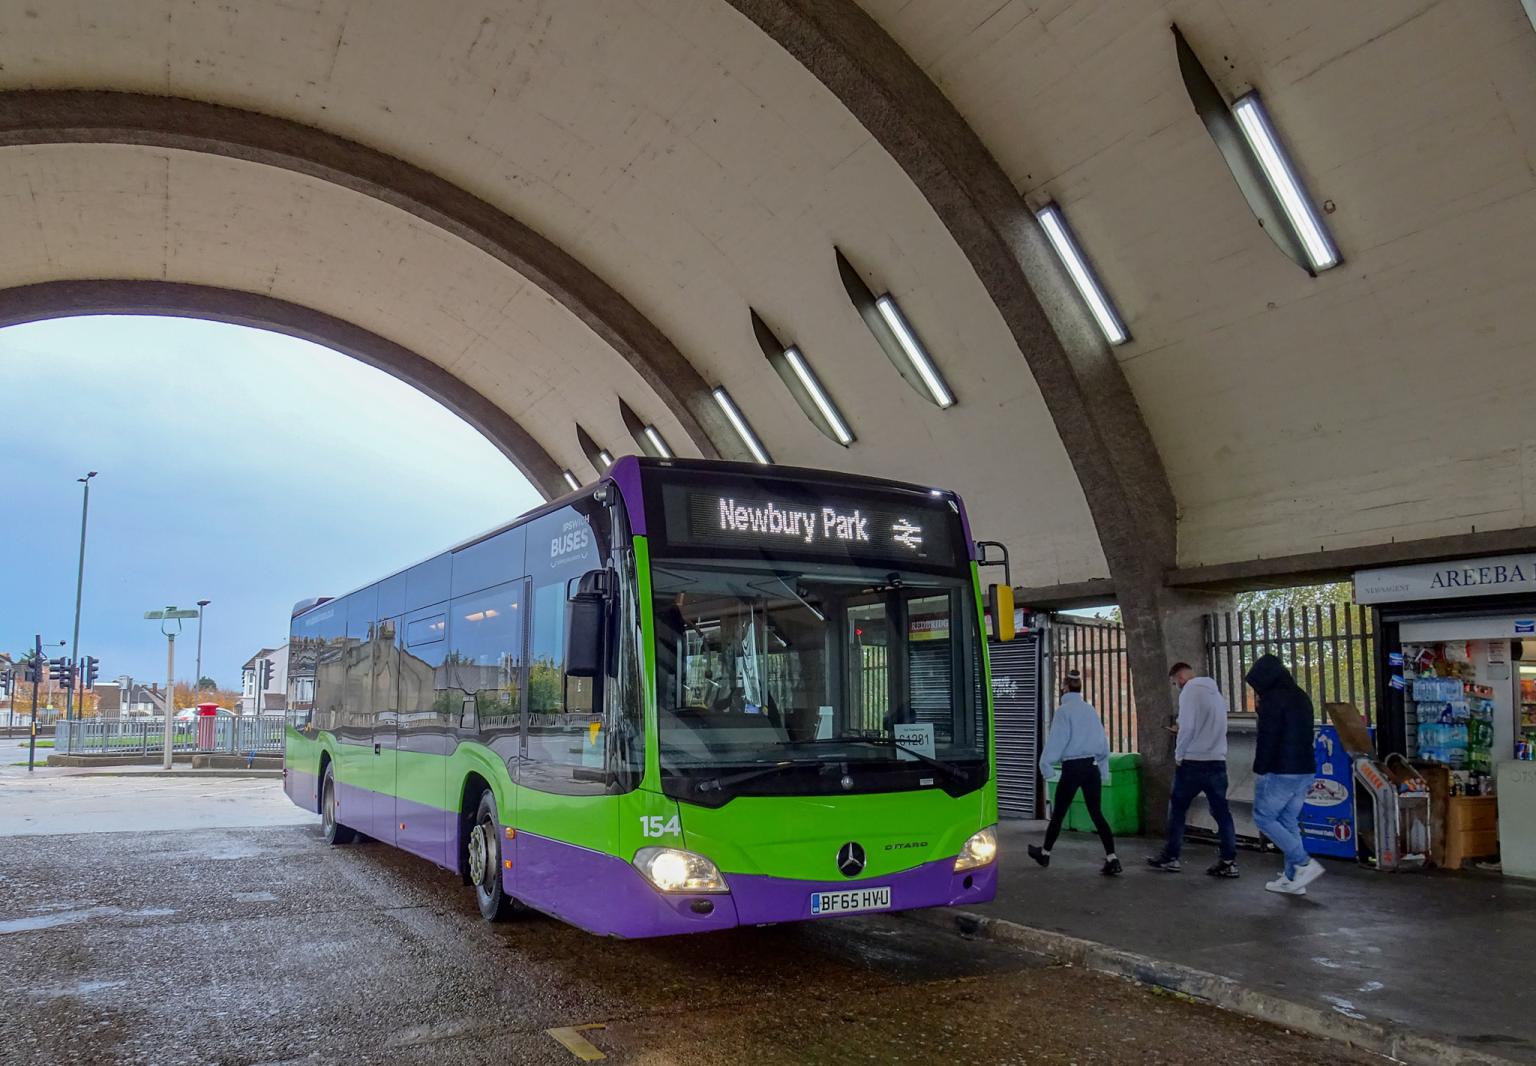 Ipswich Buses selects Optibus software